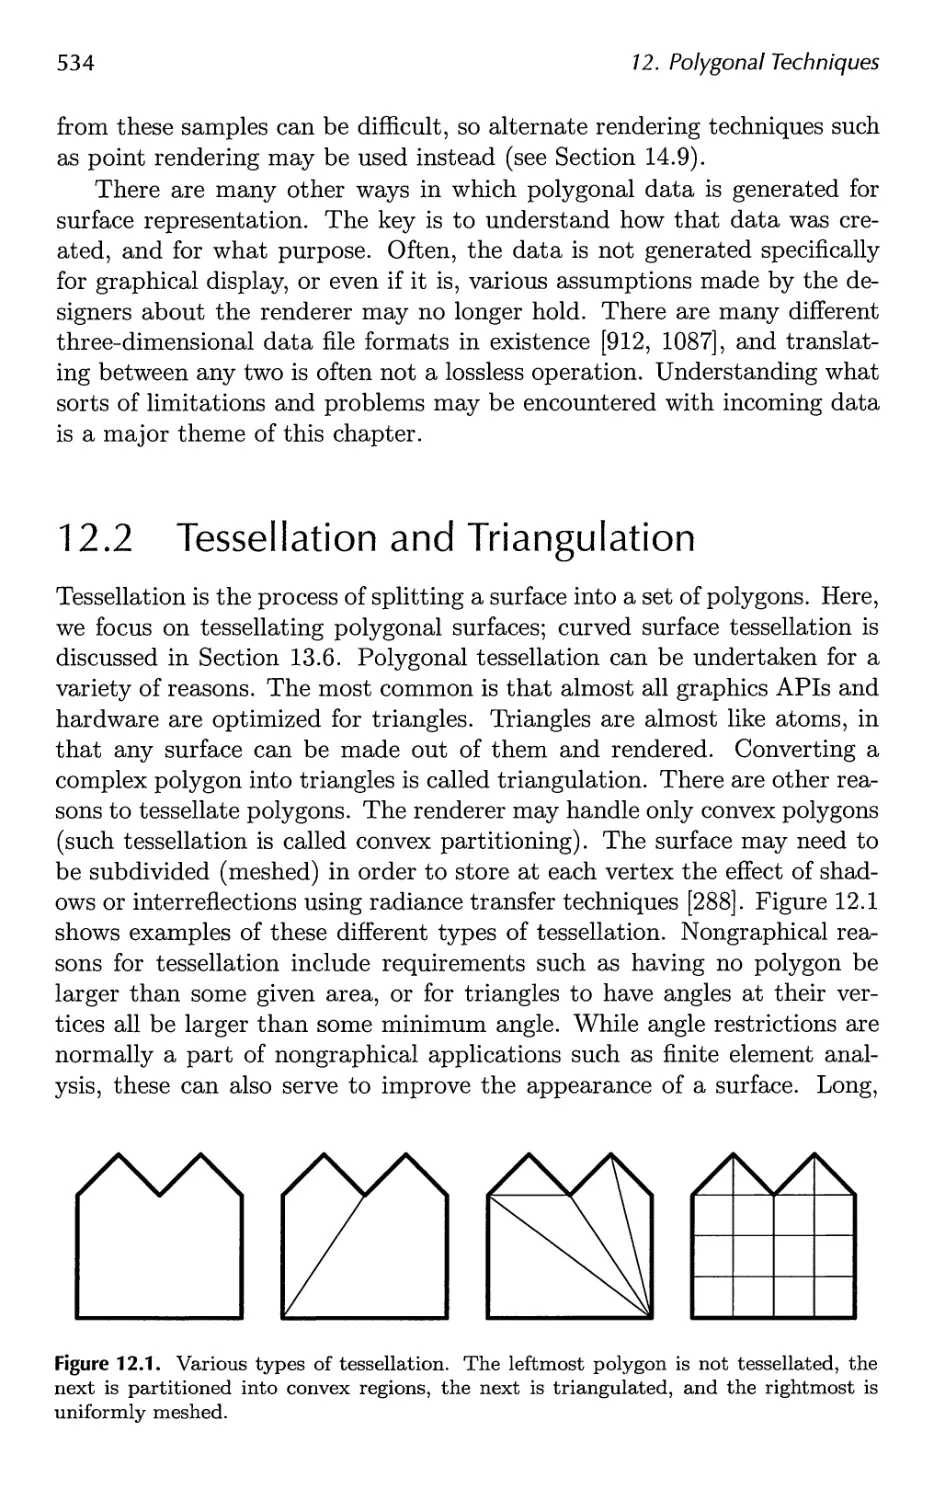 12.2 Tessellation and Triangulation